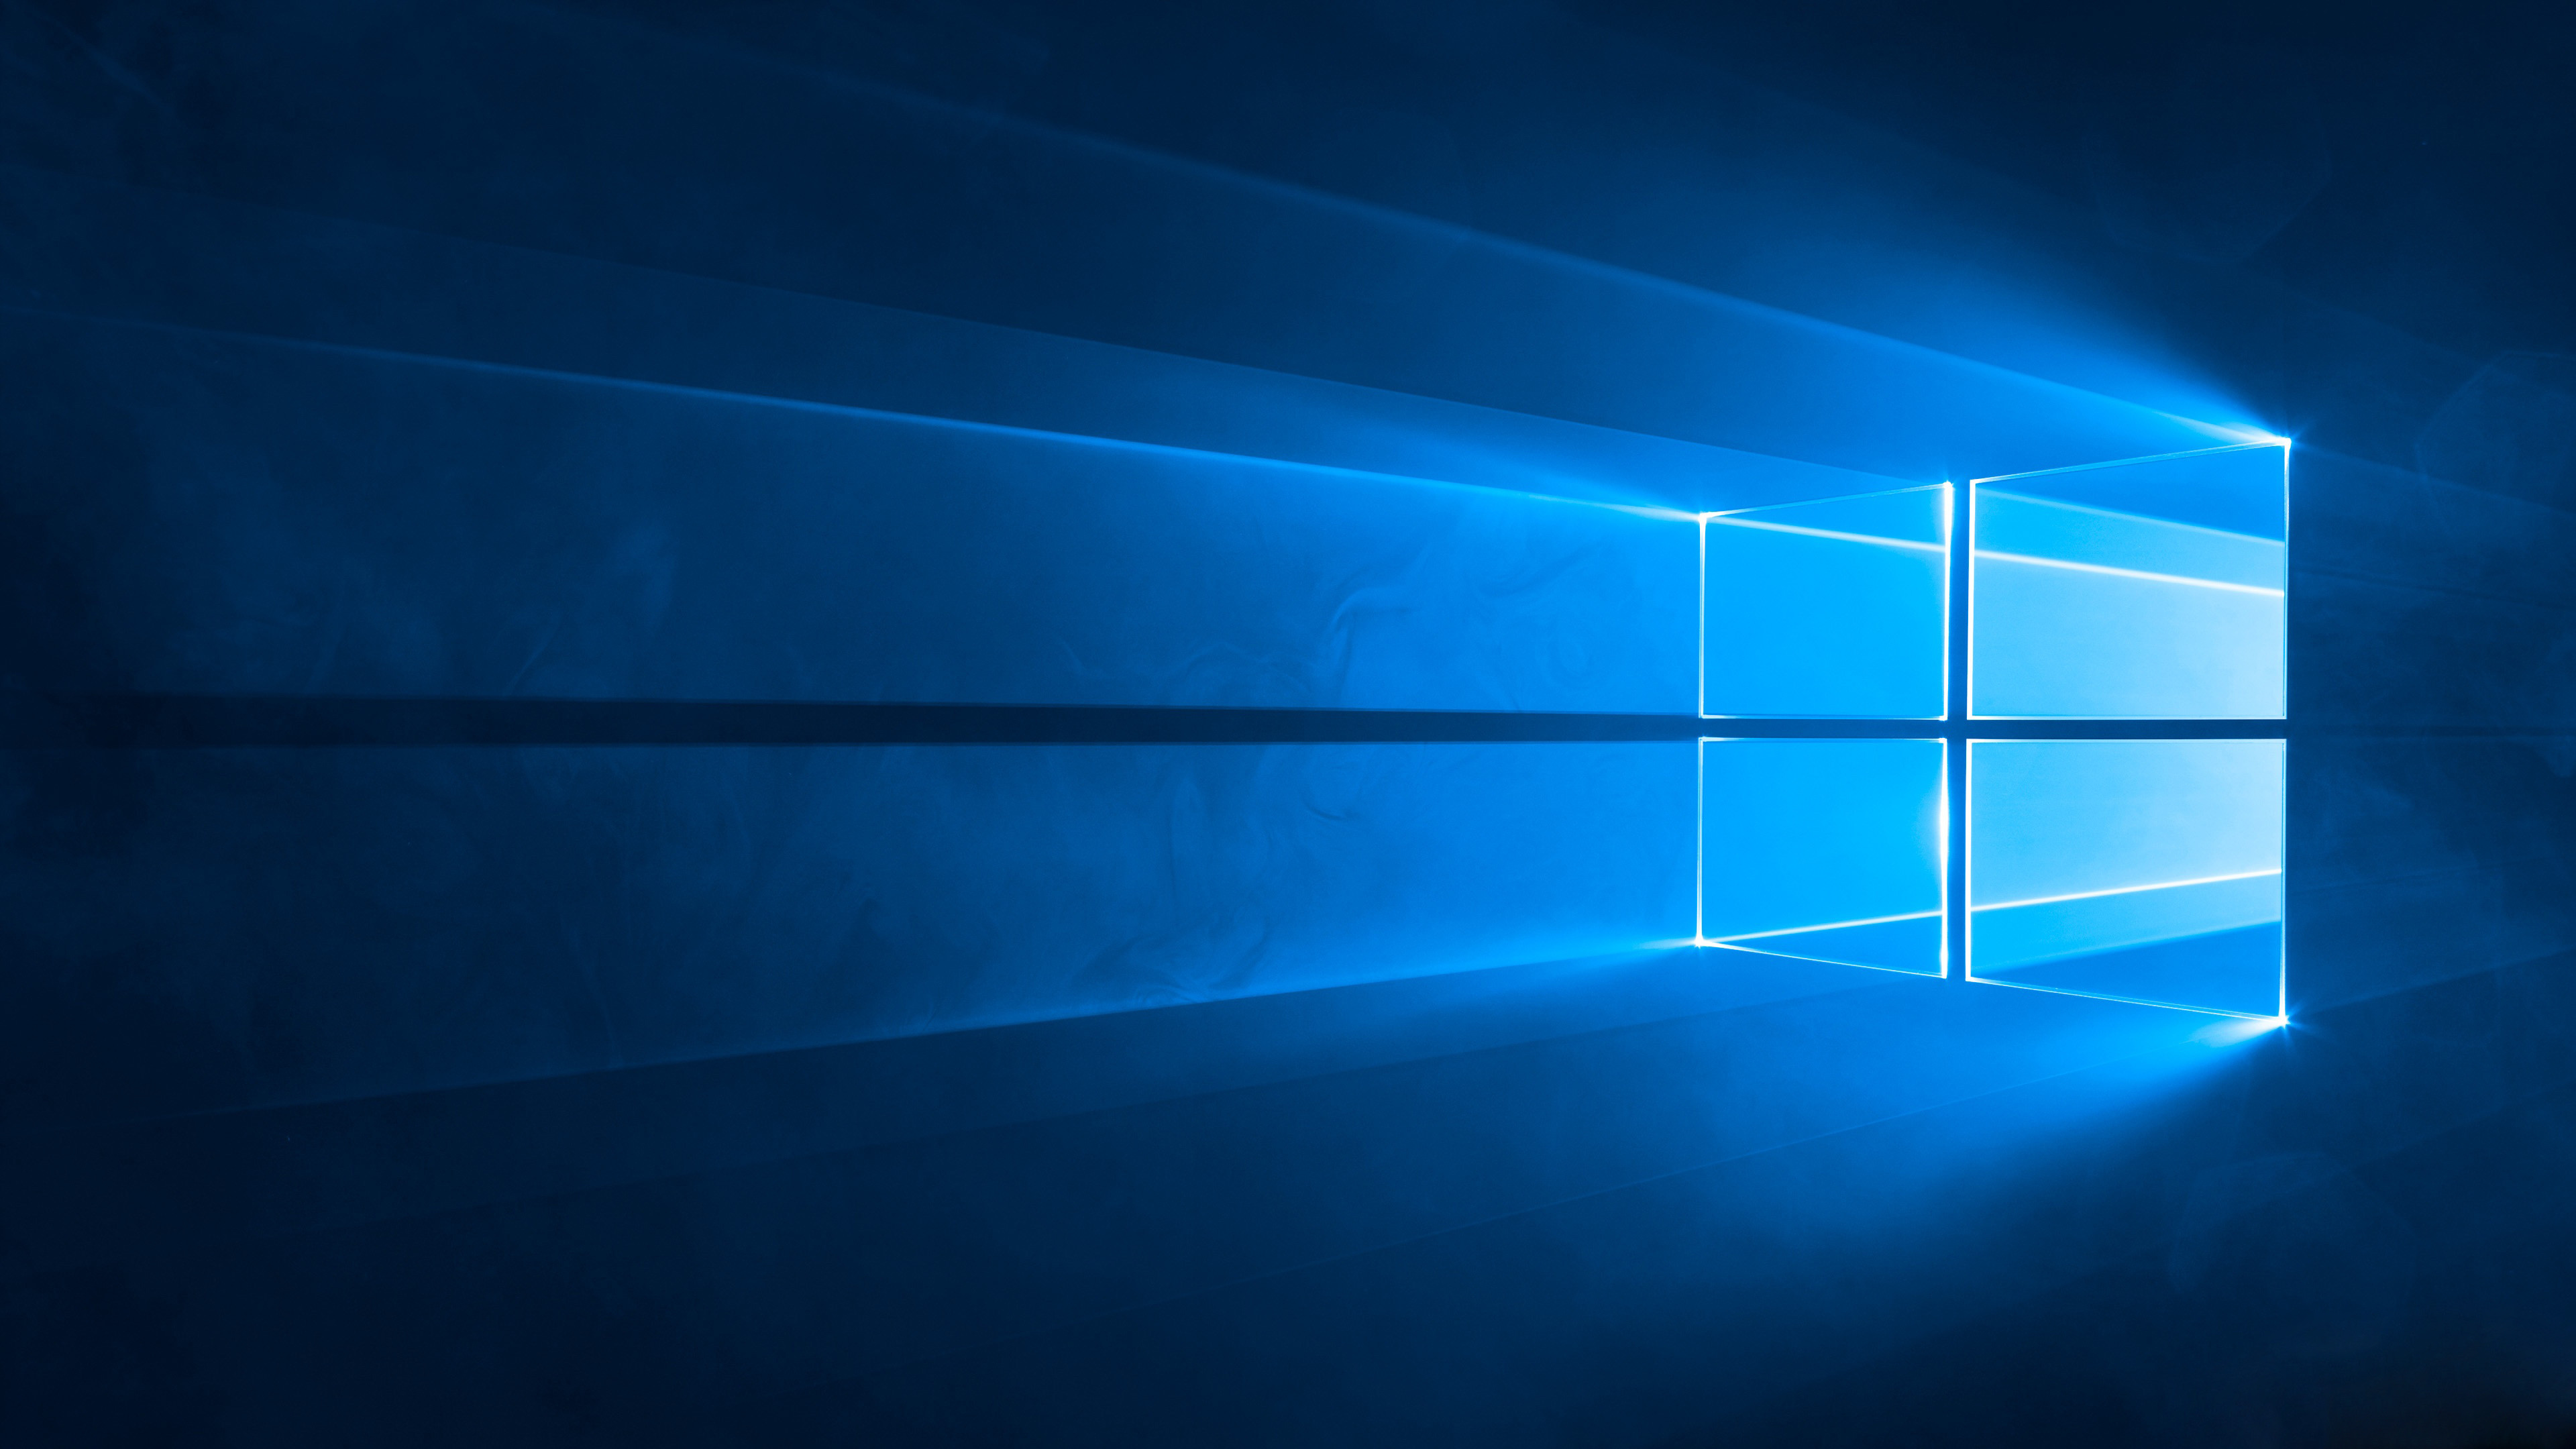 3840x2160 Windows 10 Blue Light Desktop Background 4K Wallpaper. Â«